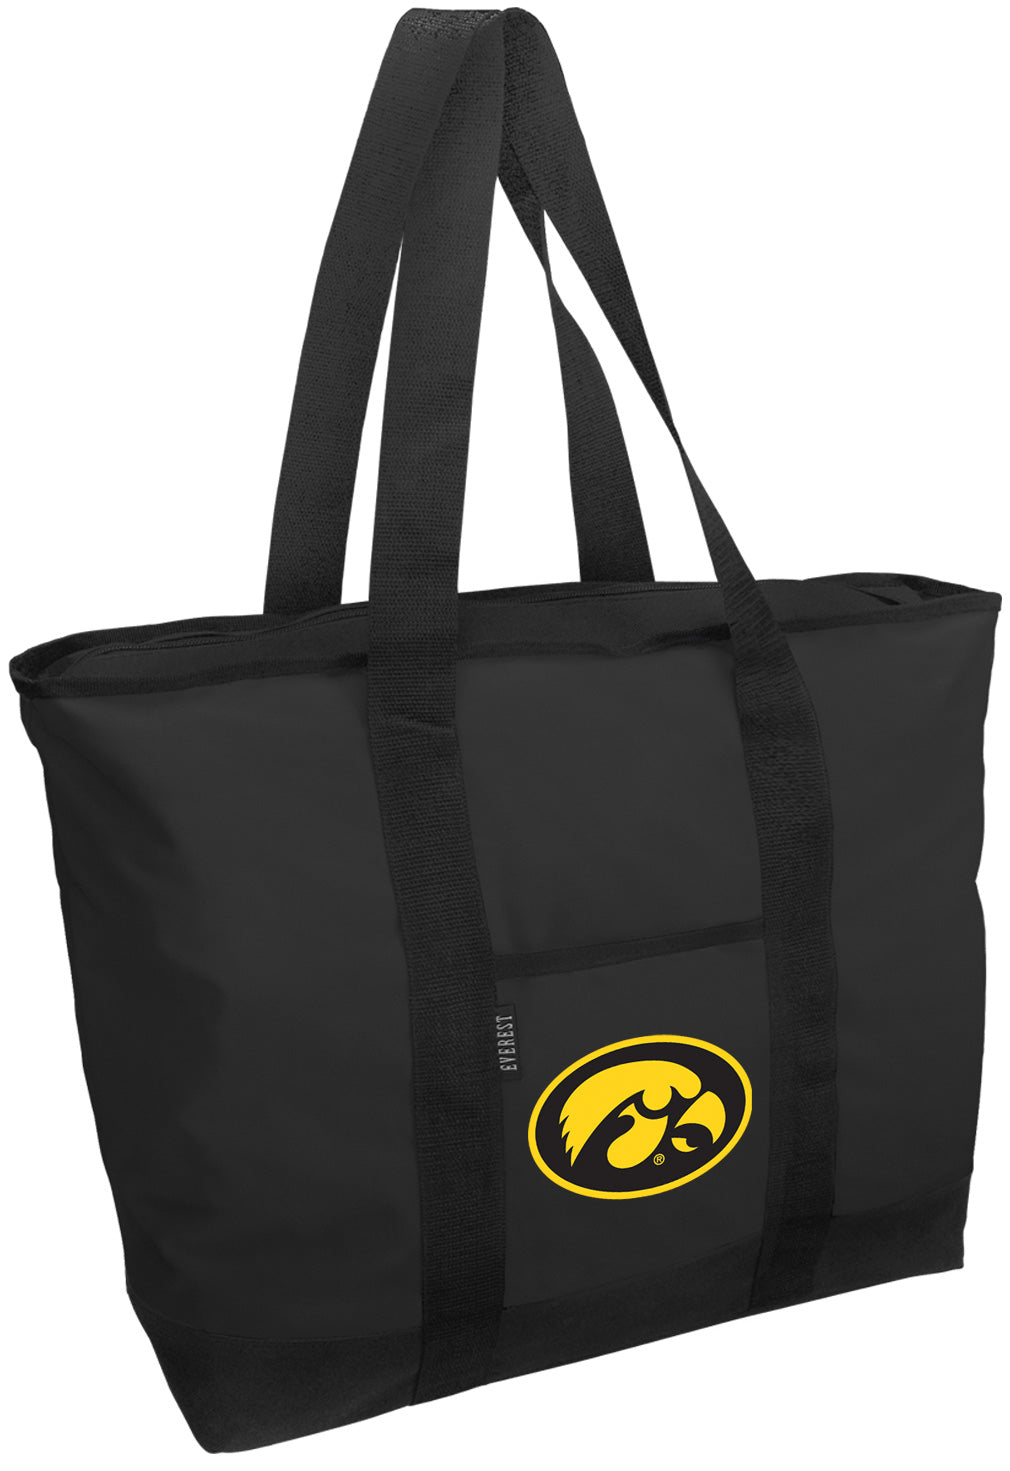 University of Iowa Tote Bag Iowa Hawkeyes Large Zippered Tote